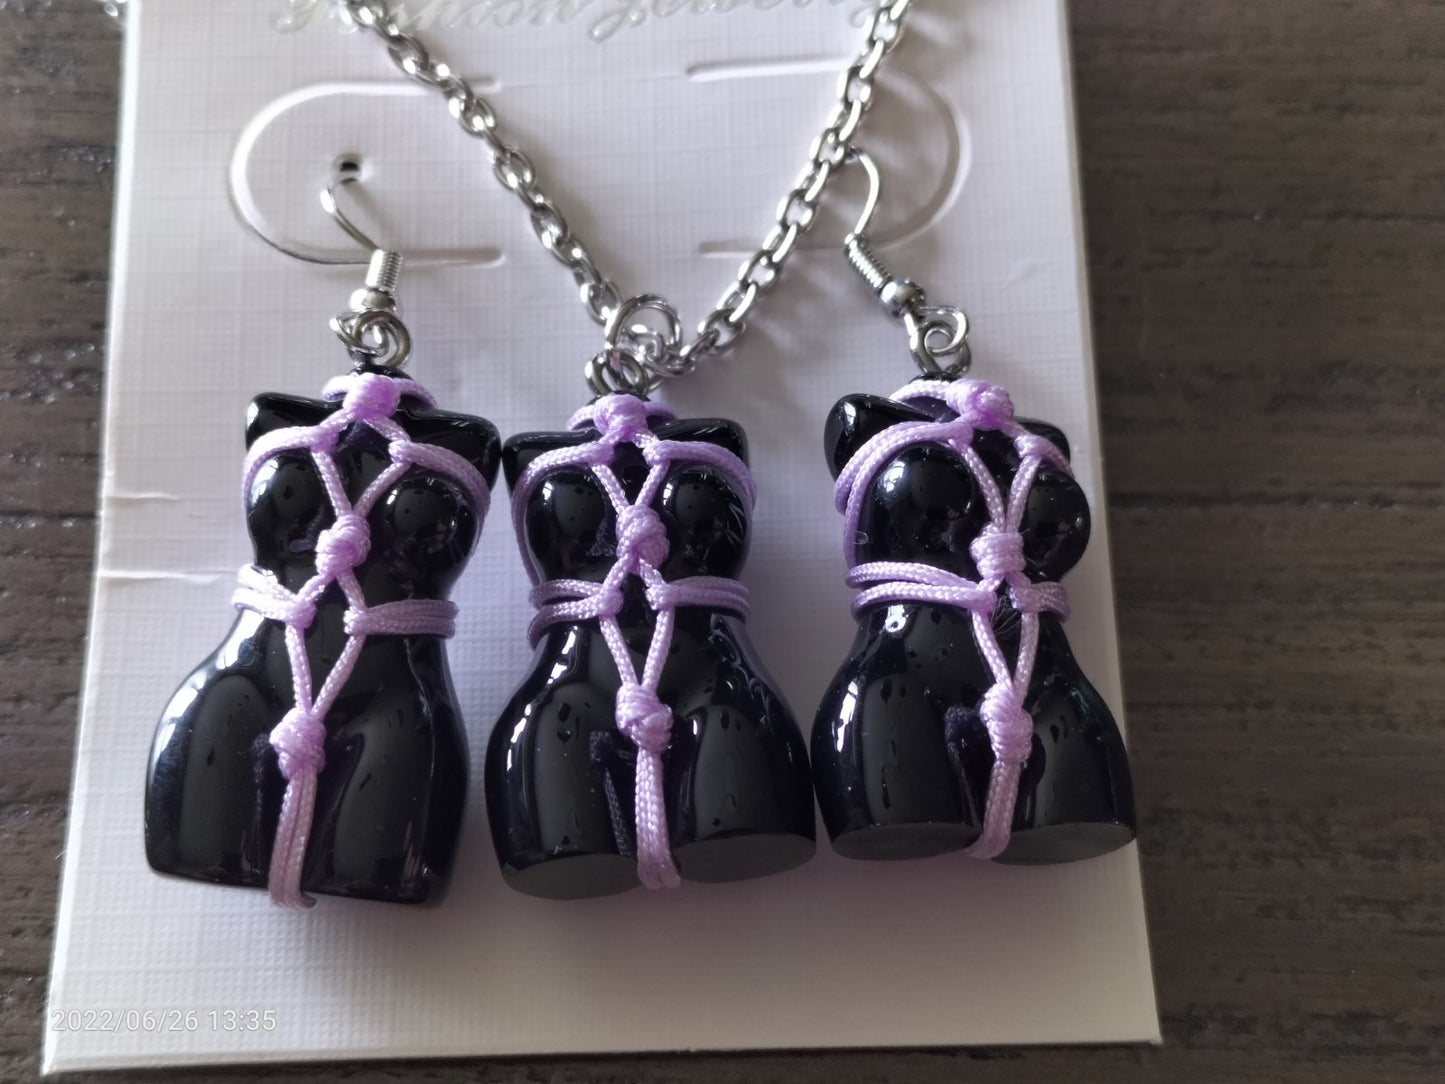 Bondage set earrings/necklace light pink rope